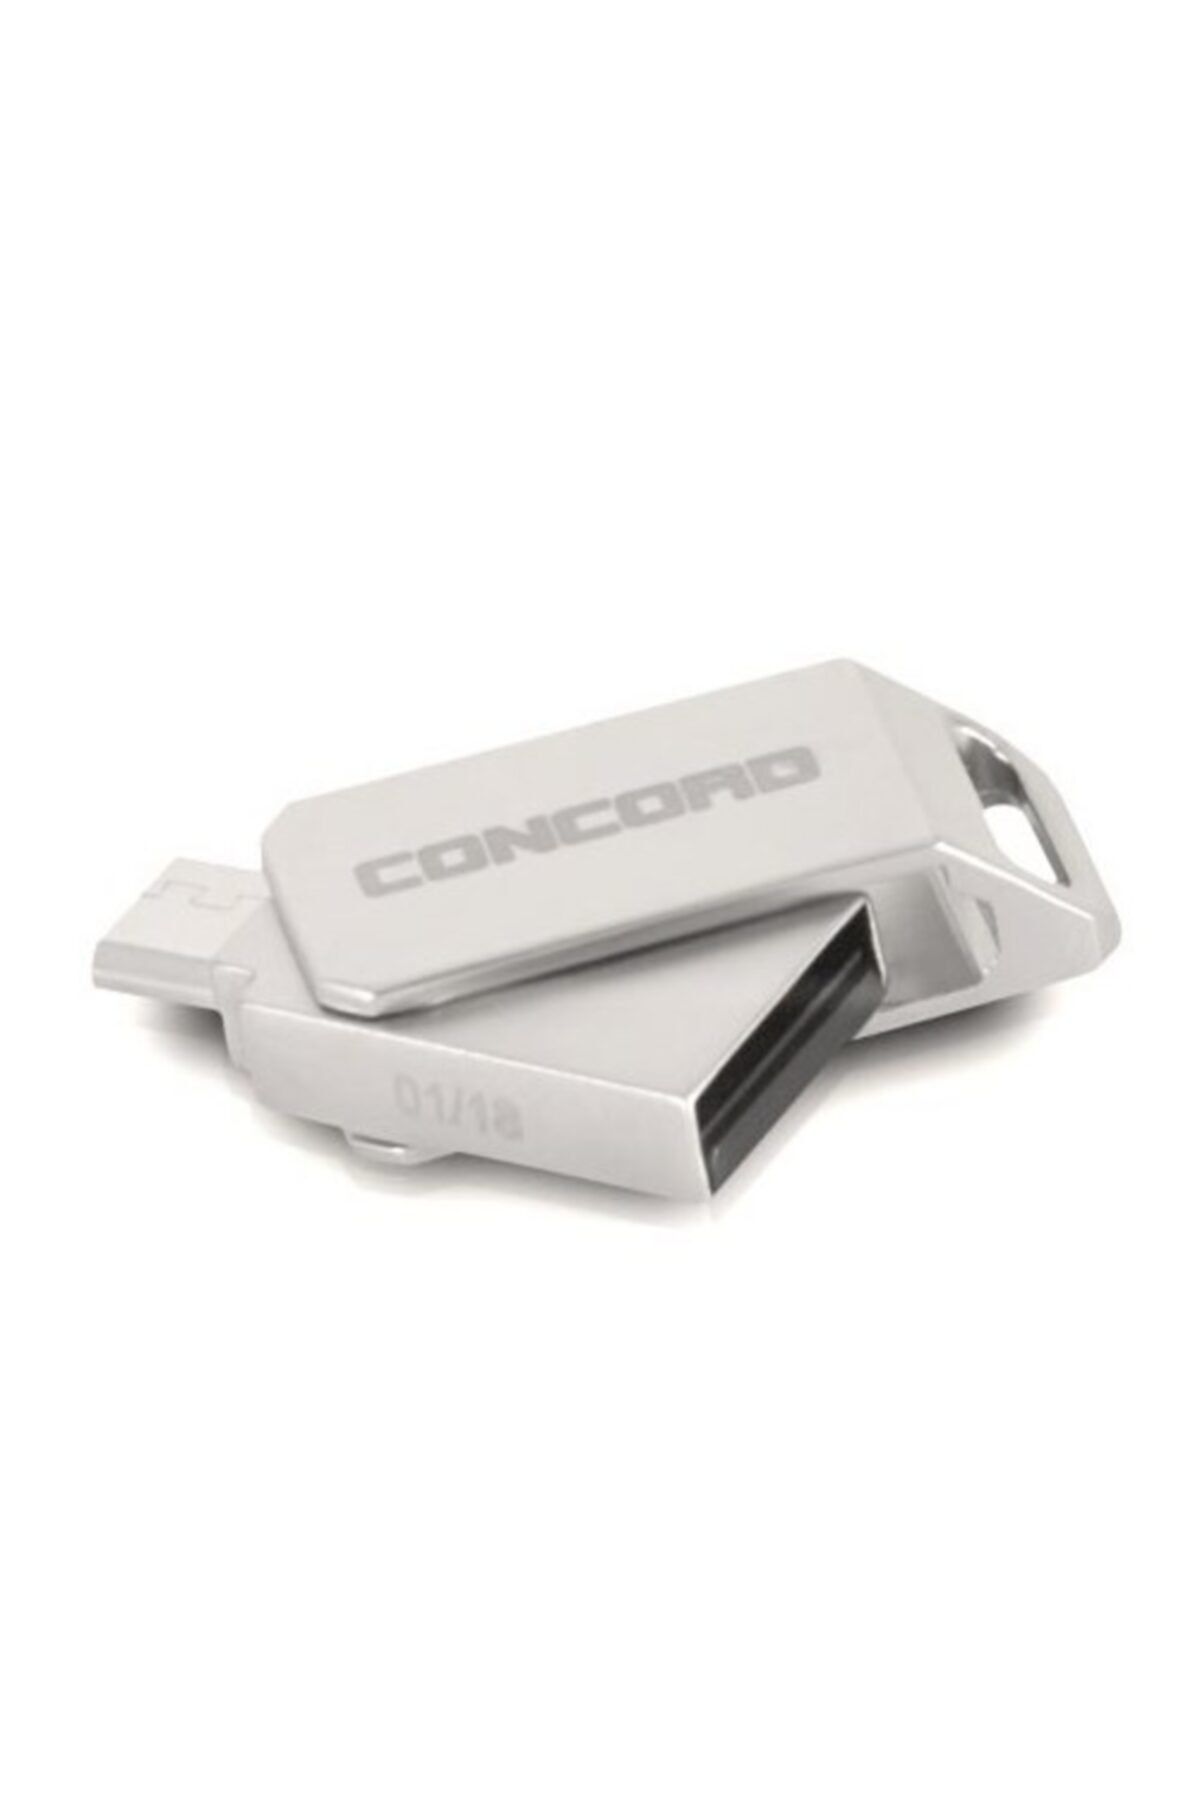 Concord 64 Gb Micro Ve Usb 2.0 Bellek Cotg64